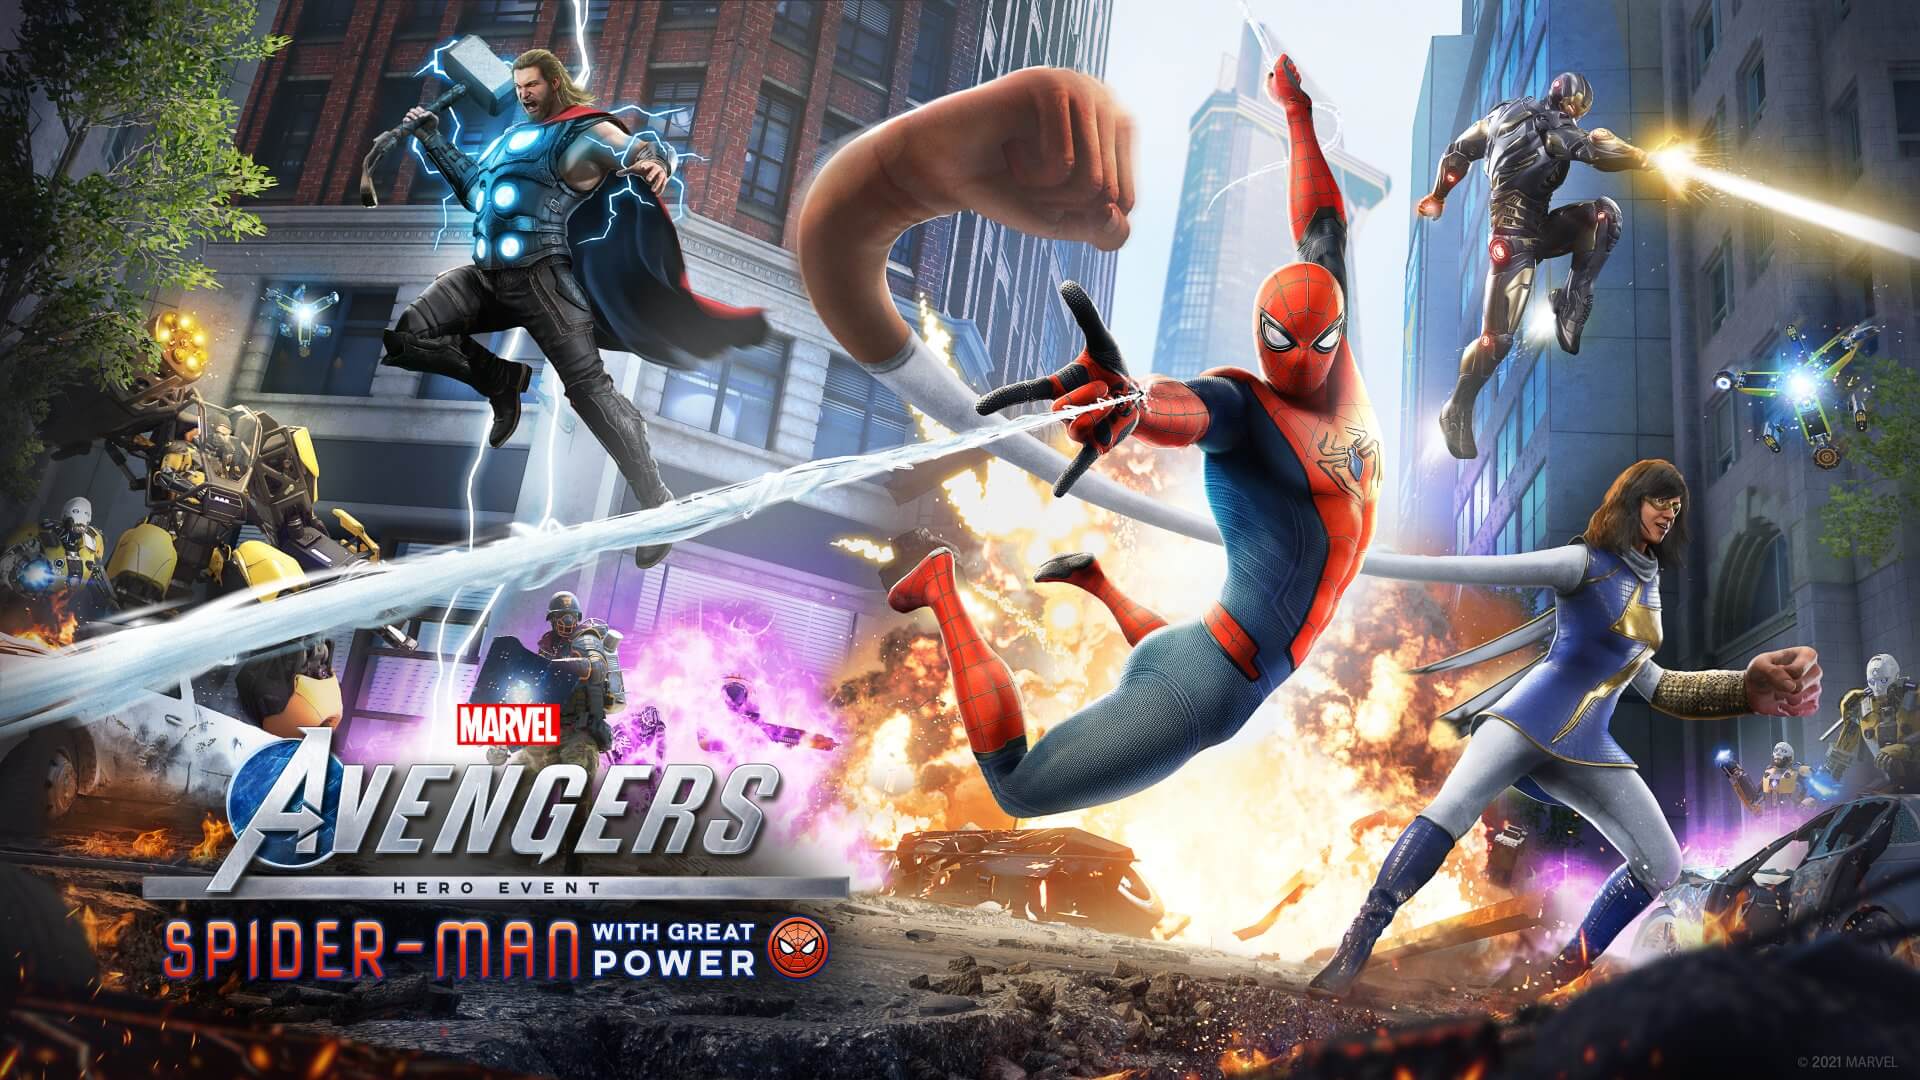 Marvel’s Avengers revela el tráiler del evento de Spider-Man